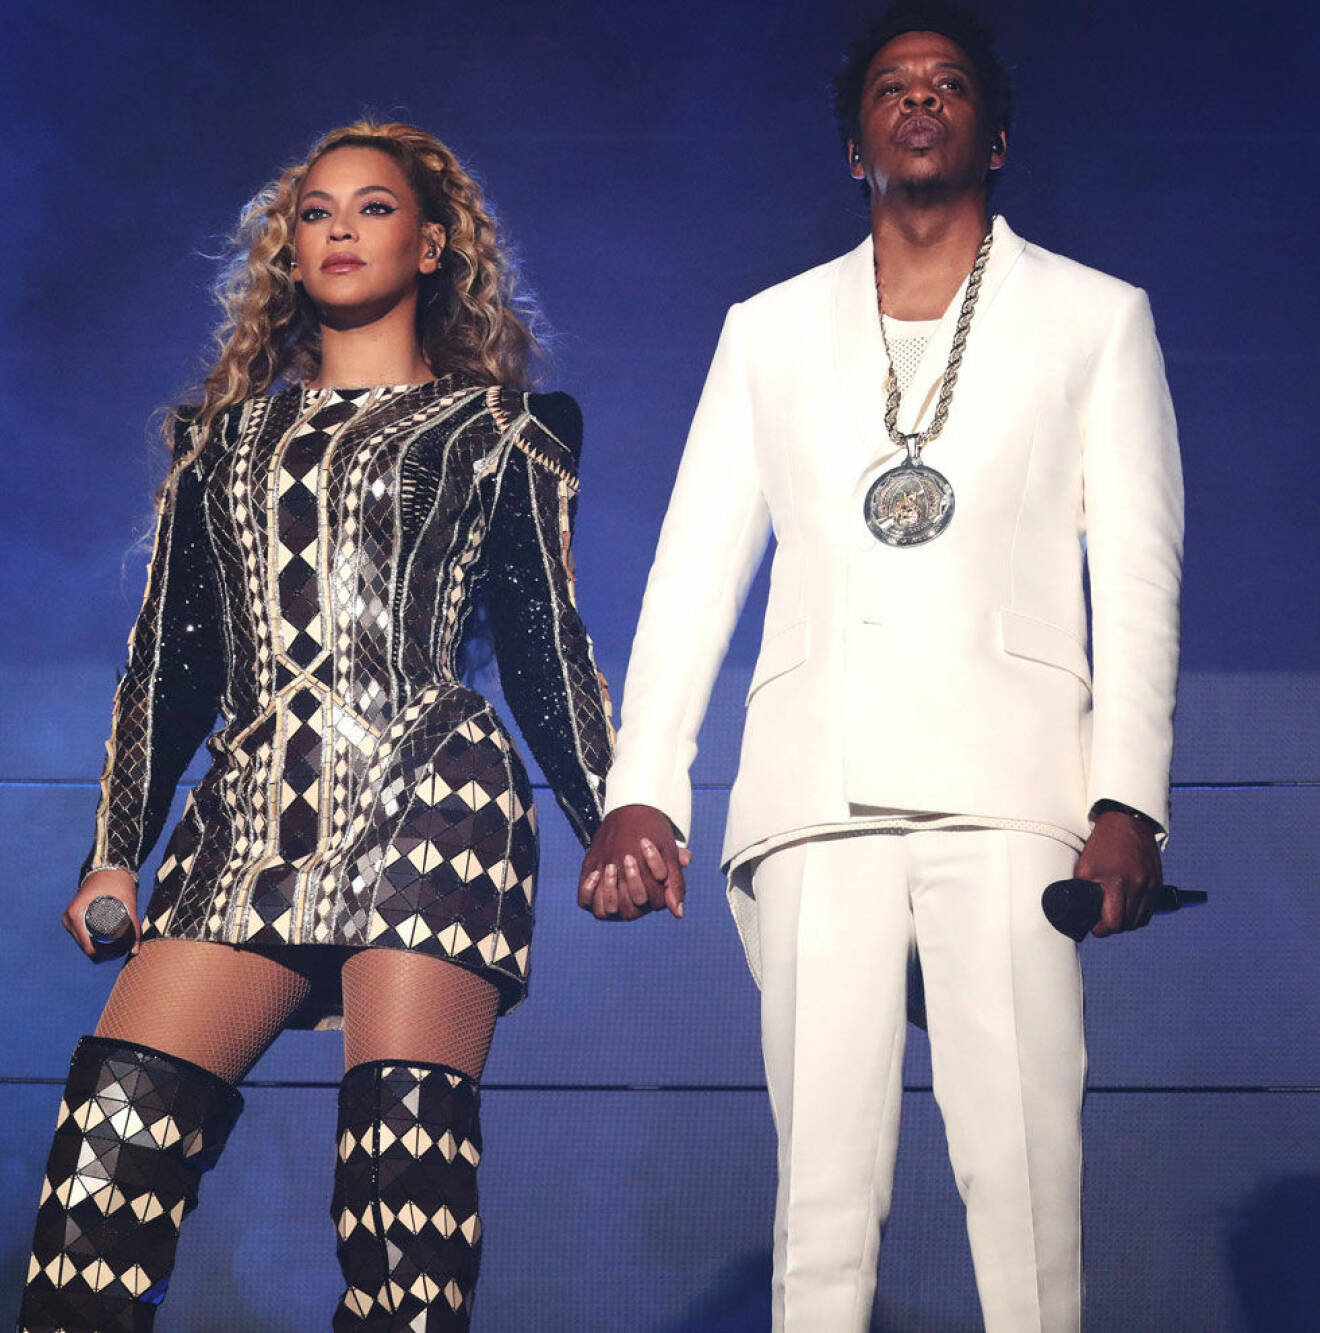 Beyonce och Jay-Z gästar Friends Arena i Stockholm. 